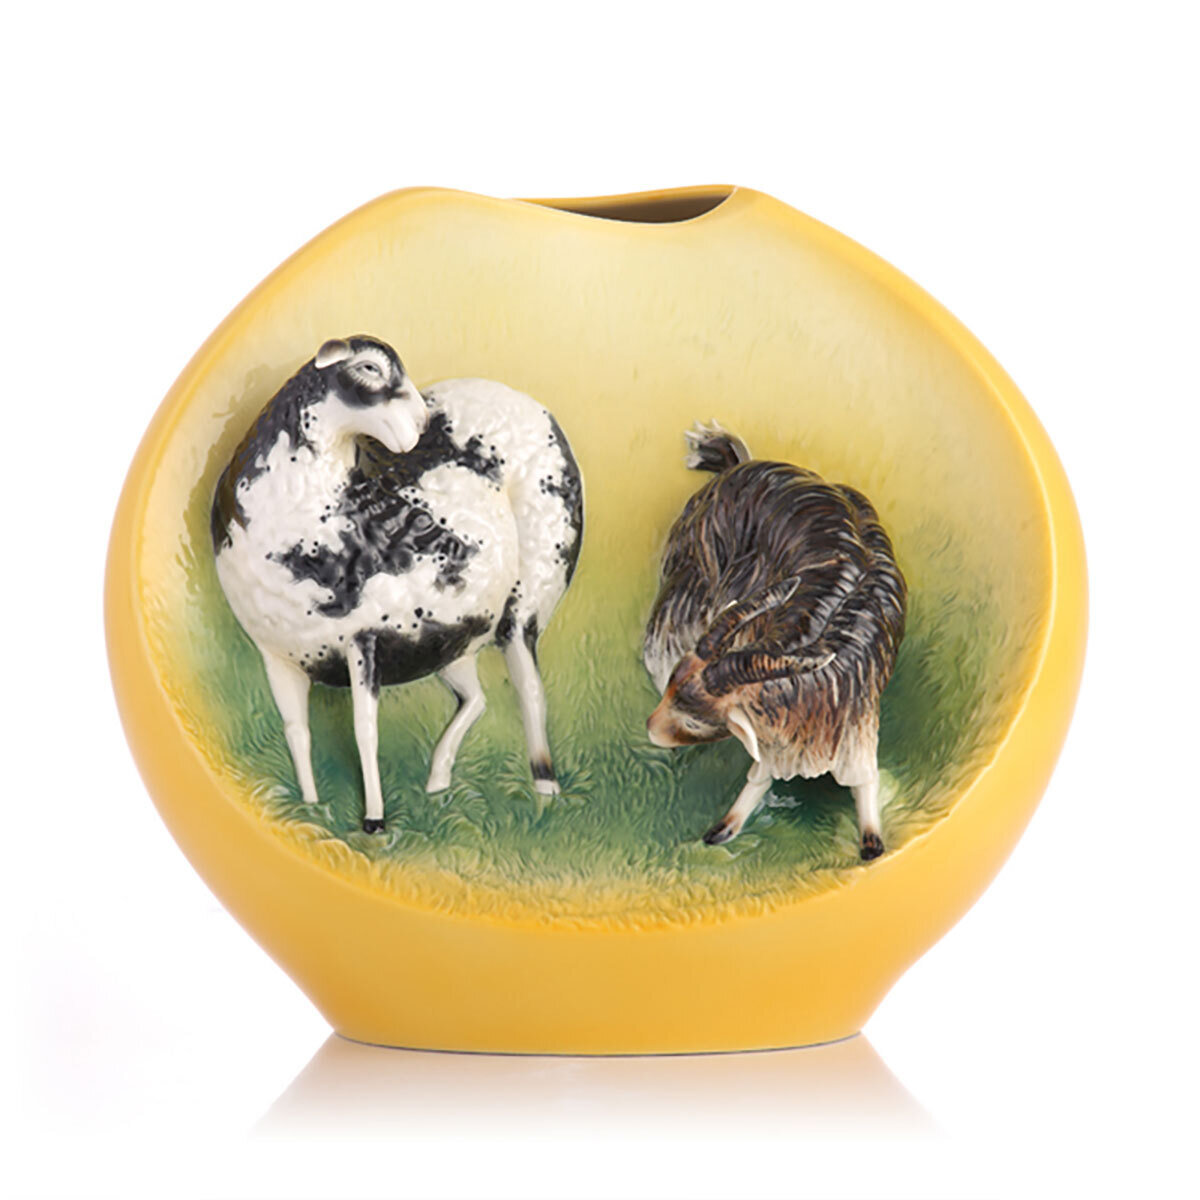 Franz Porcelain Goat and Sheep Vase Limited Editon of 1688 FZ03423